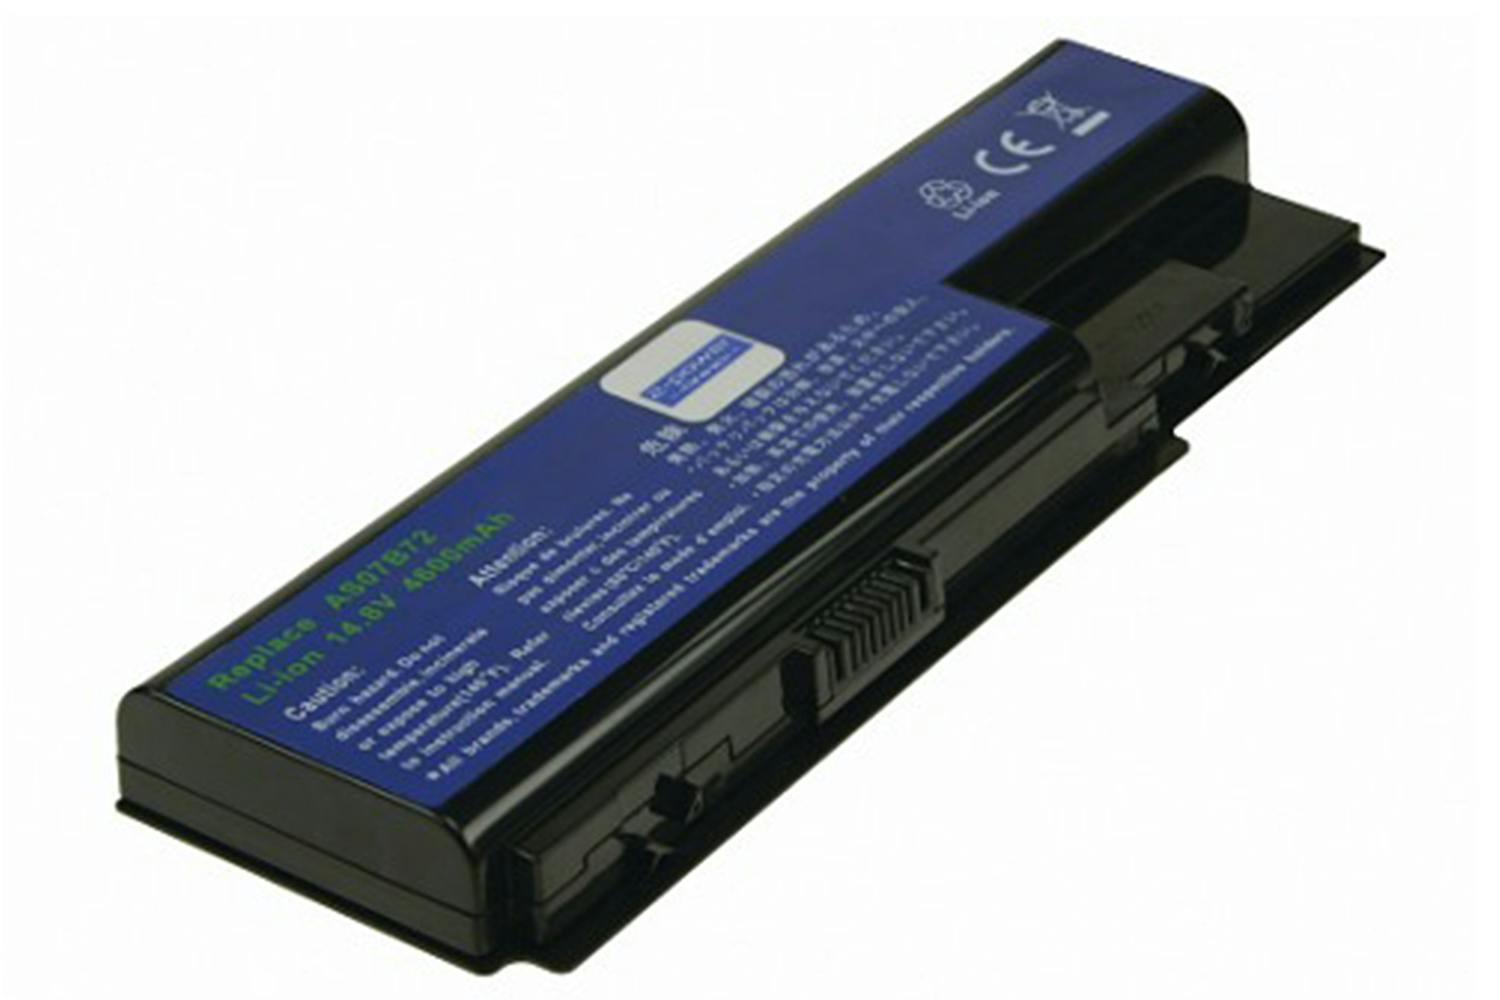 Аккумуляторы для батареи ноутбука. Li-ion 14.8v 4400mah. Батарея ноутбука Acer модель Aspire 26. Red Battery Pack 14.8v.